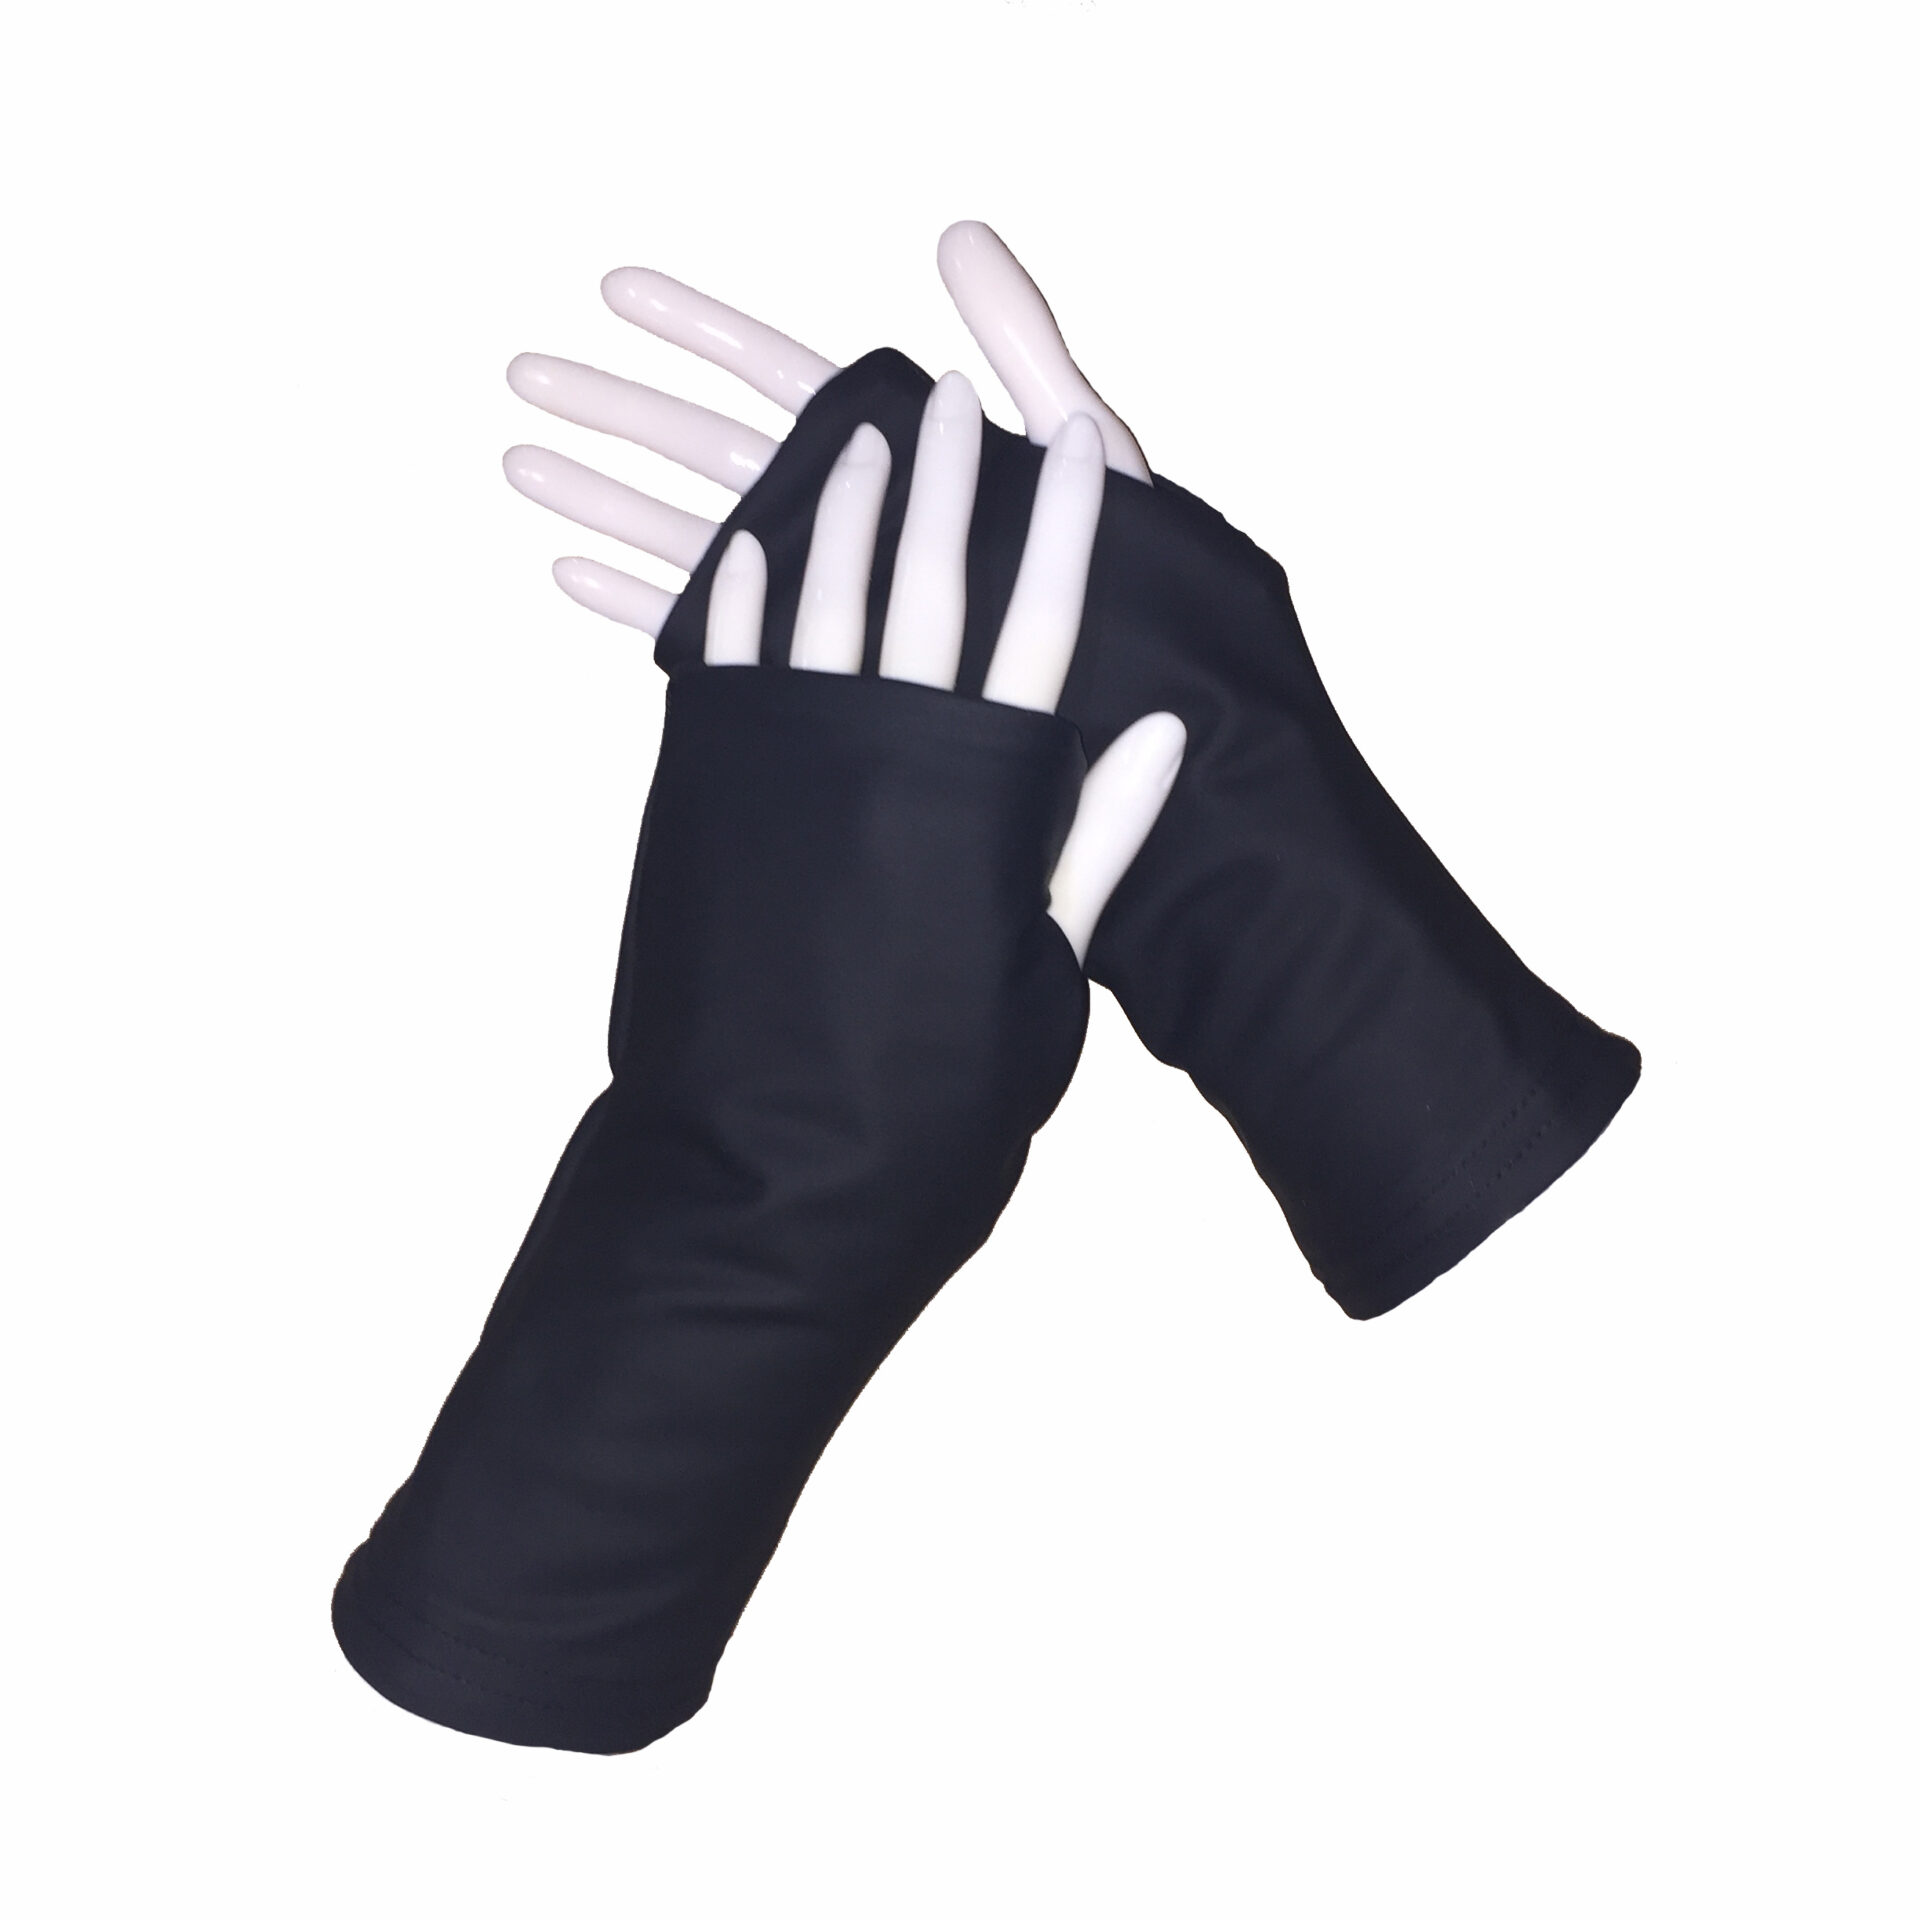 Waterproof Fingerless Gloves are Water Repellent